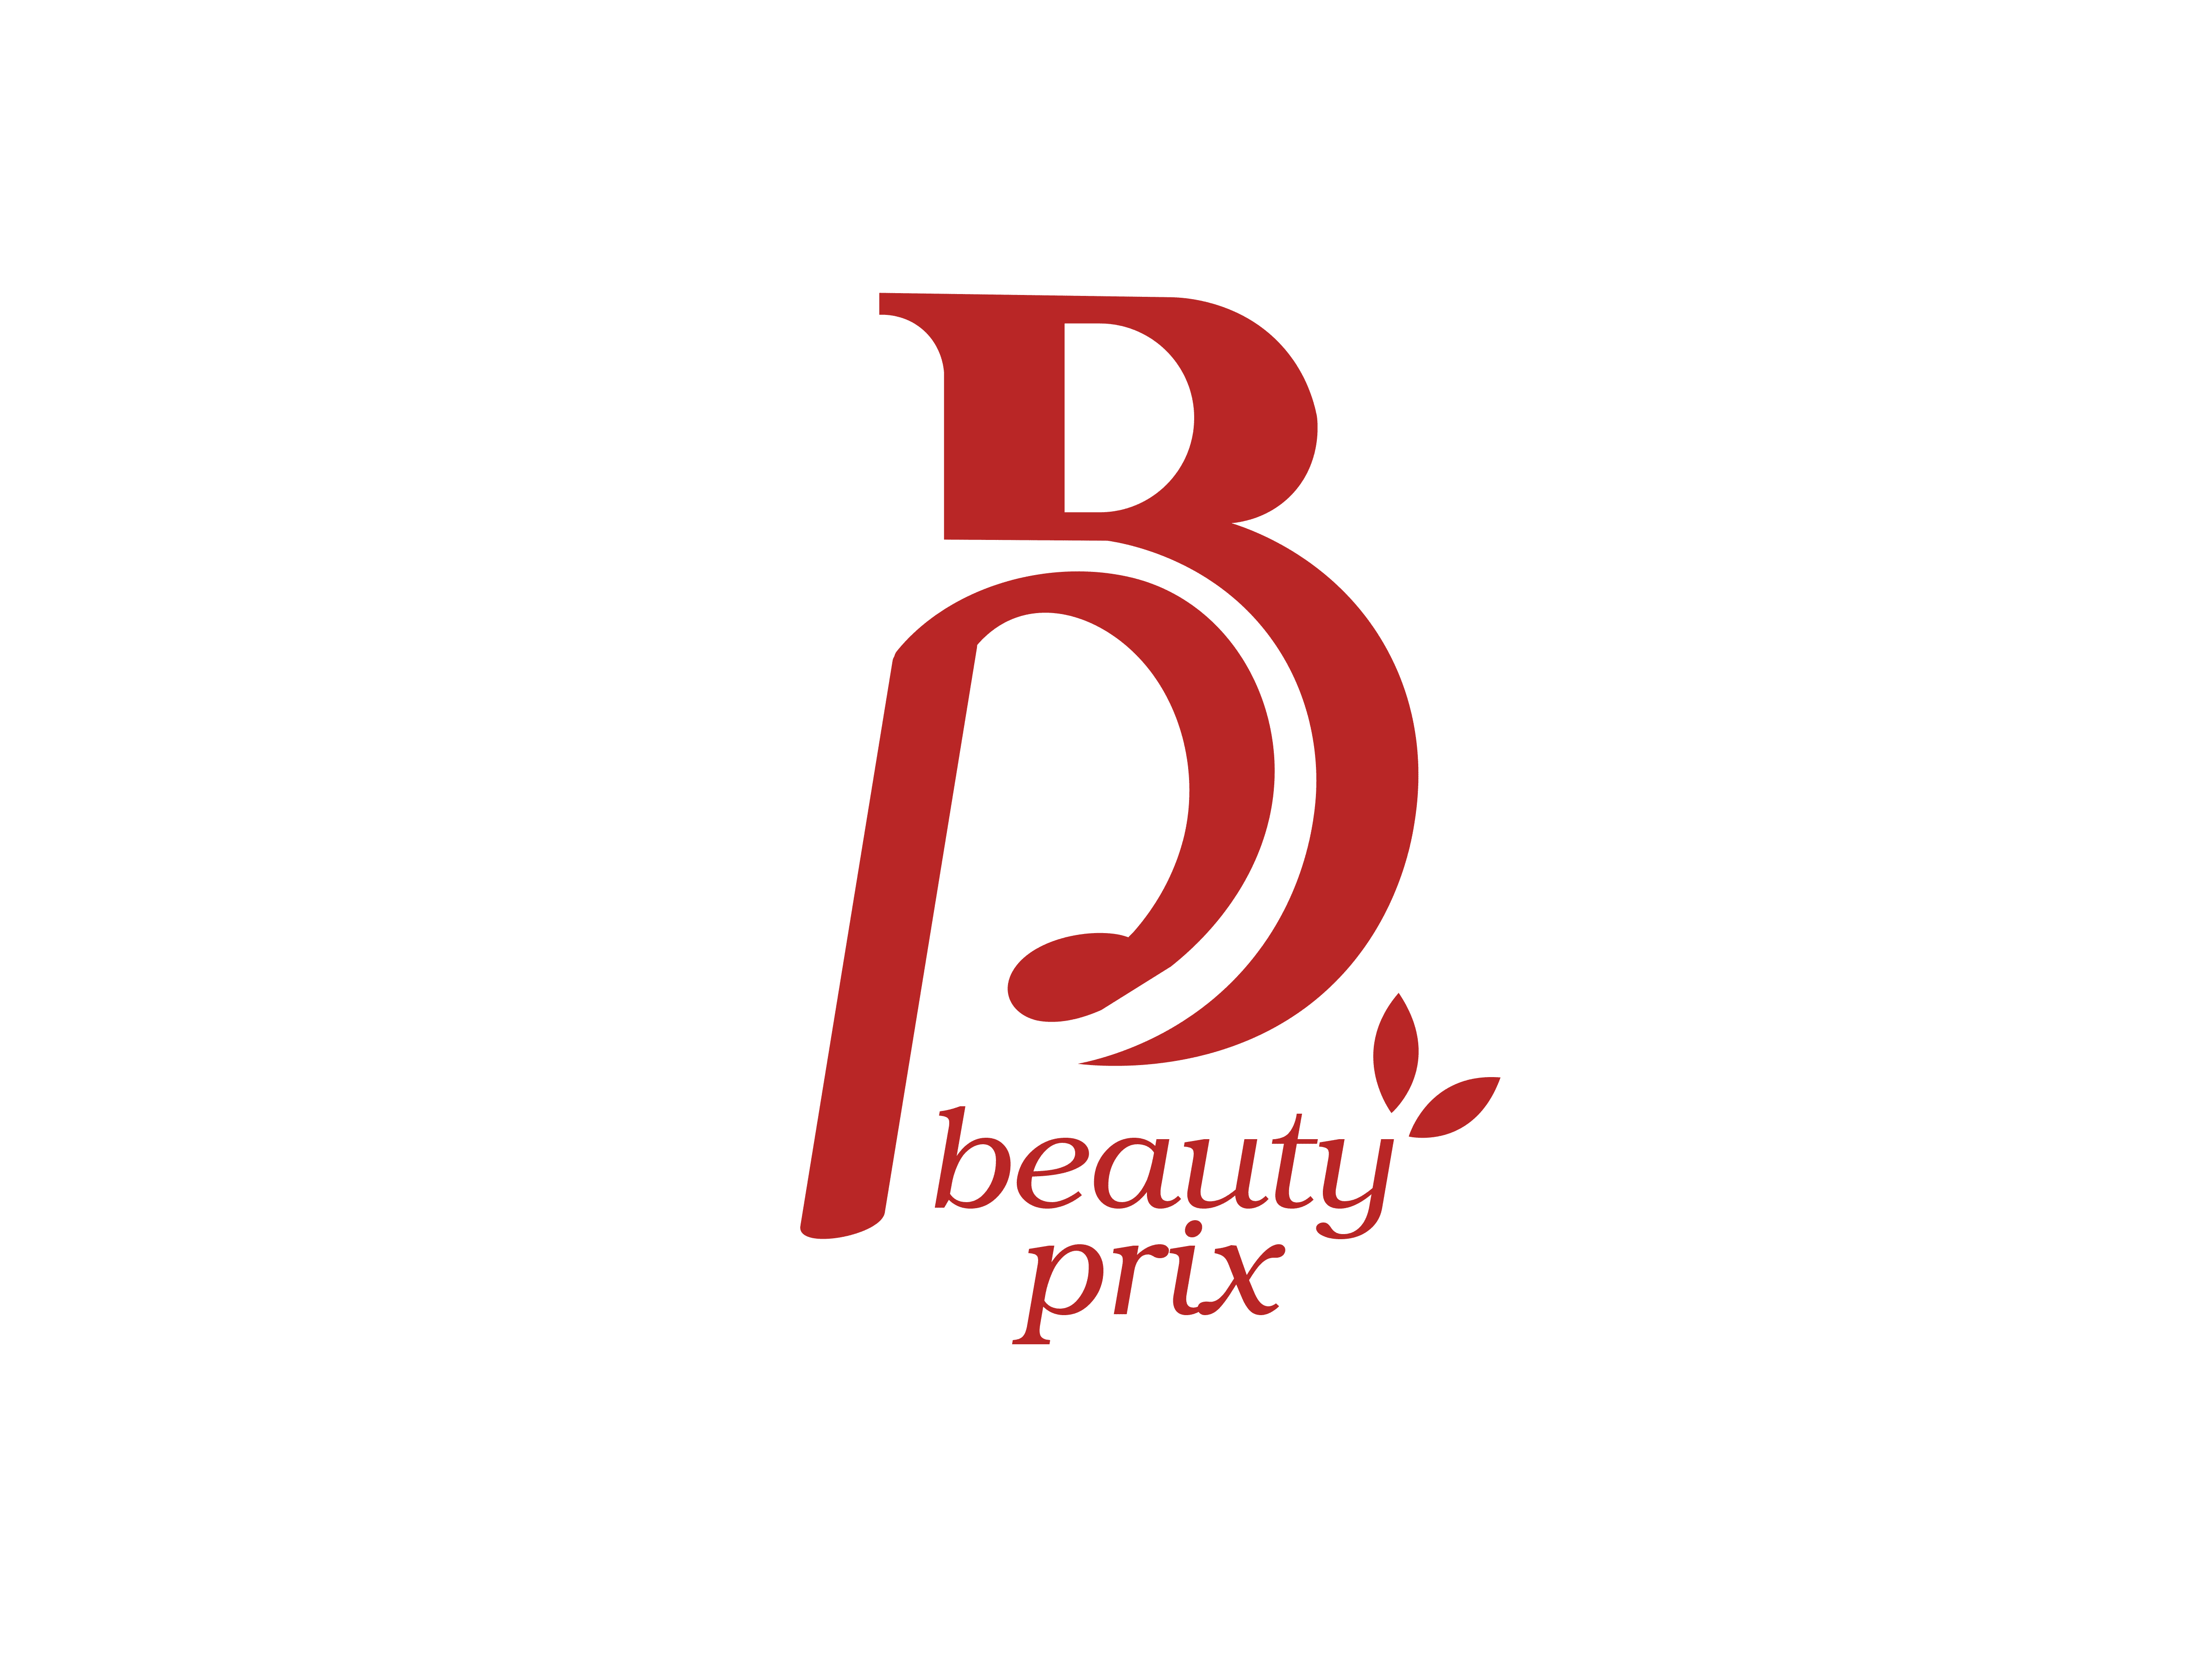 beauty prix logo (1)